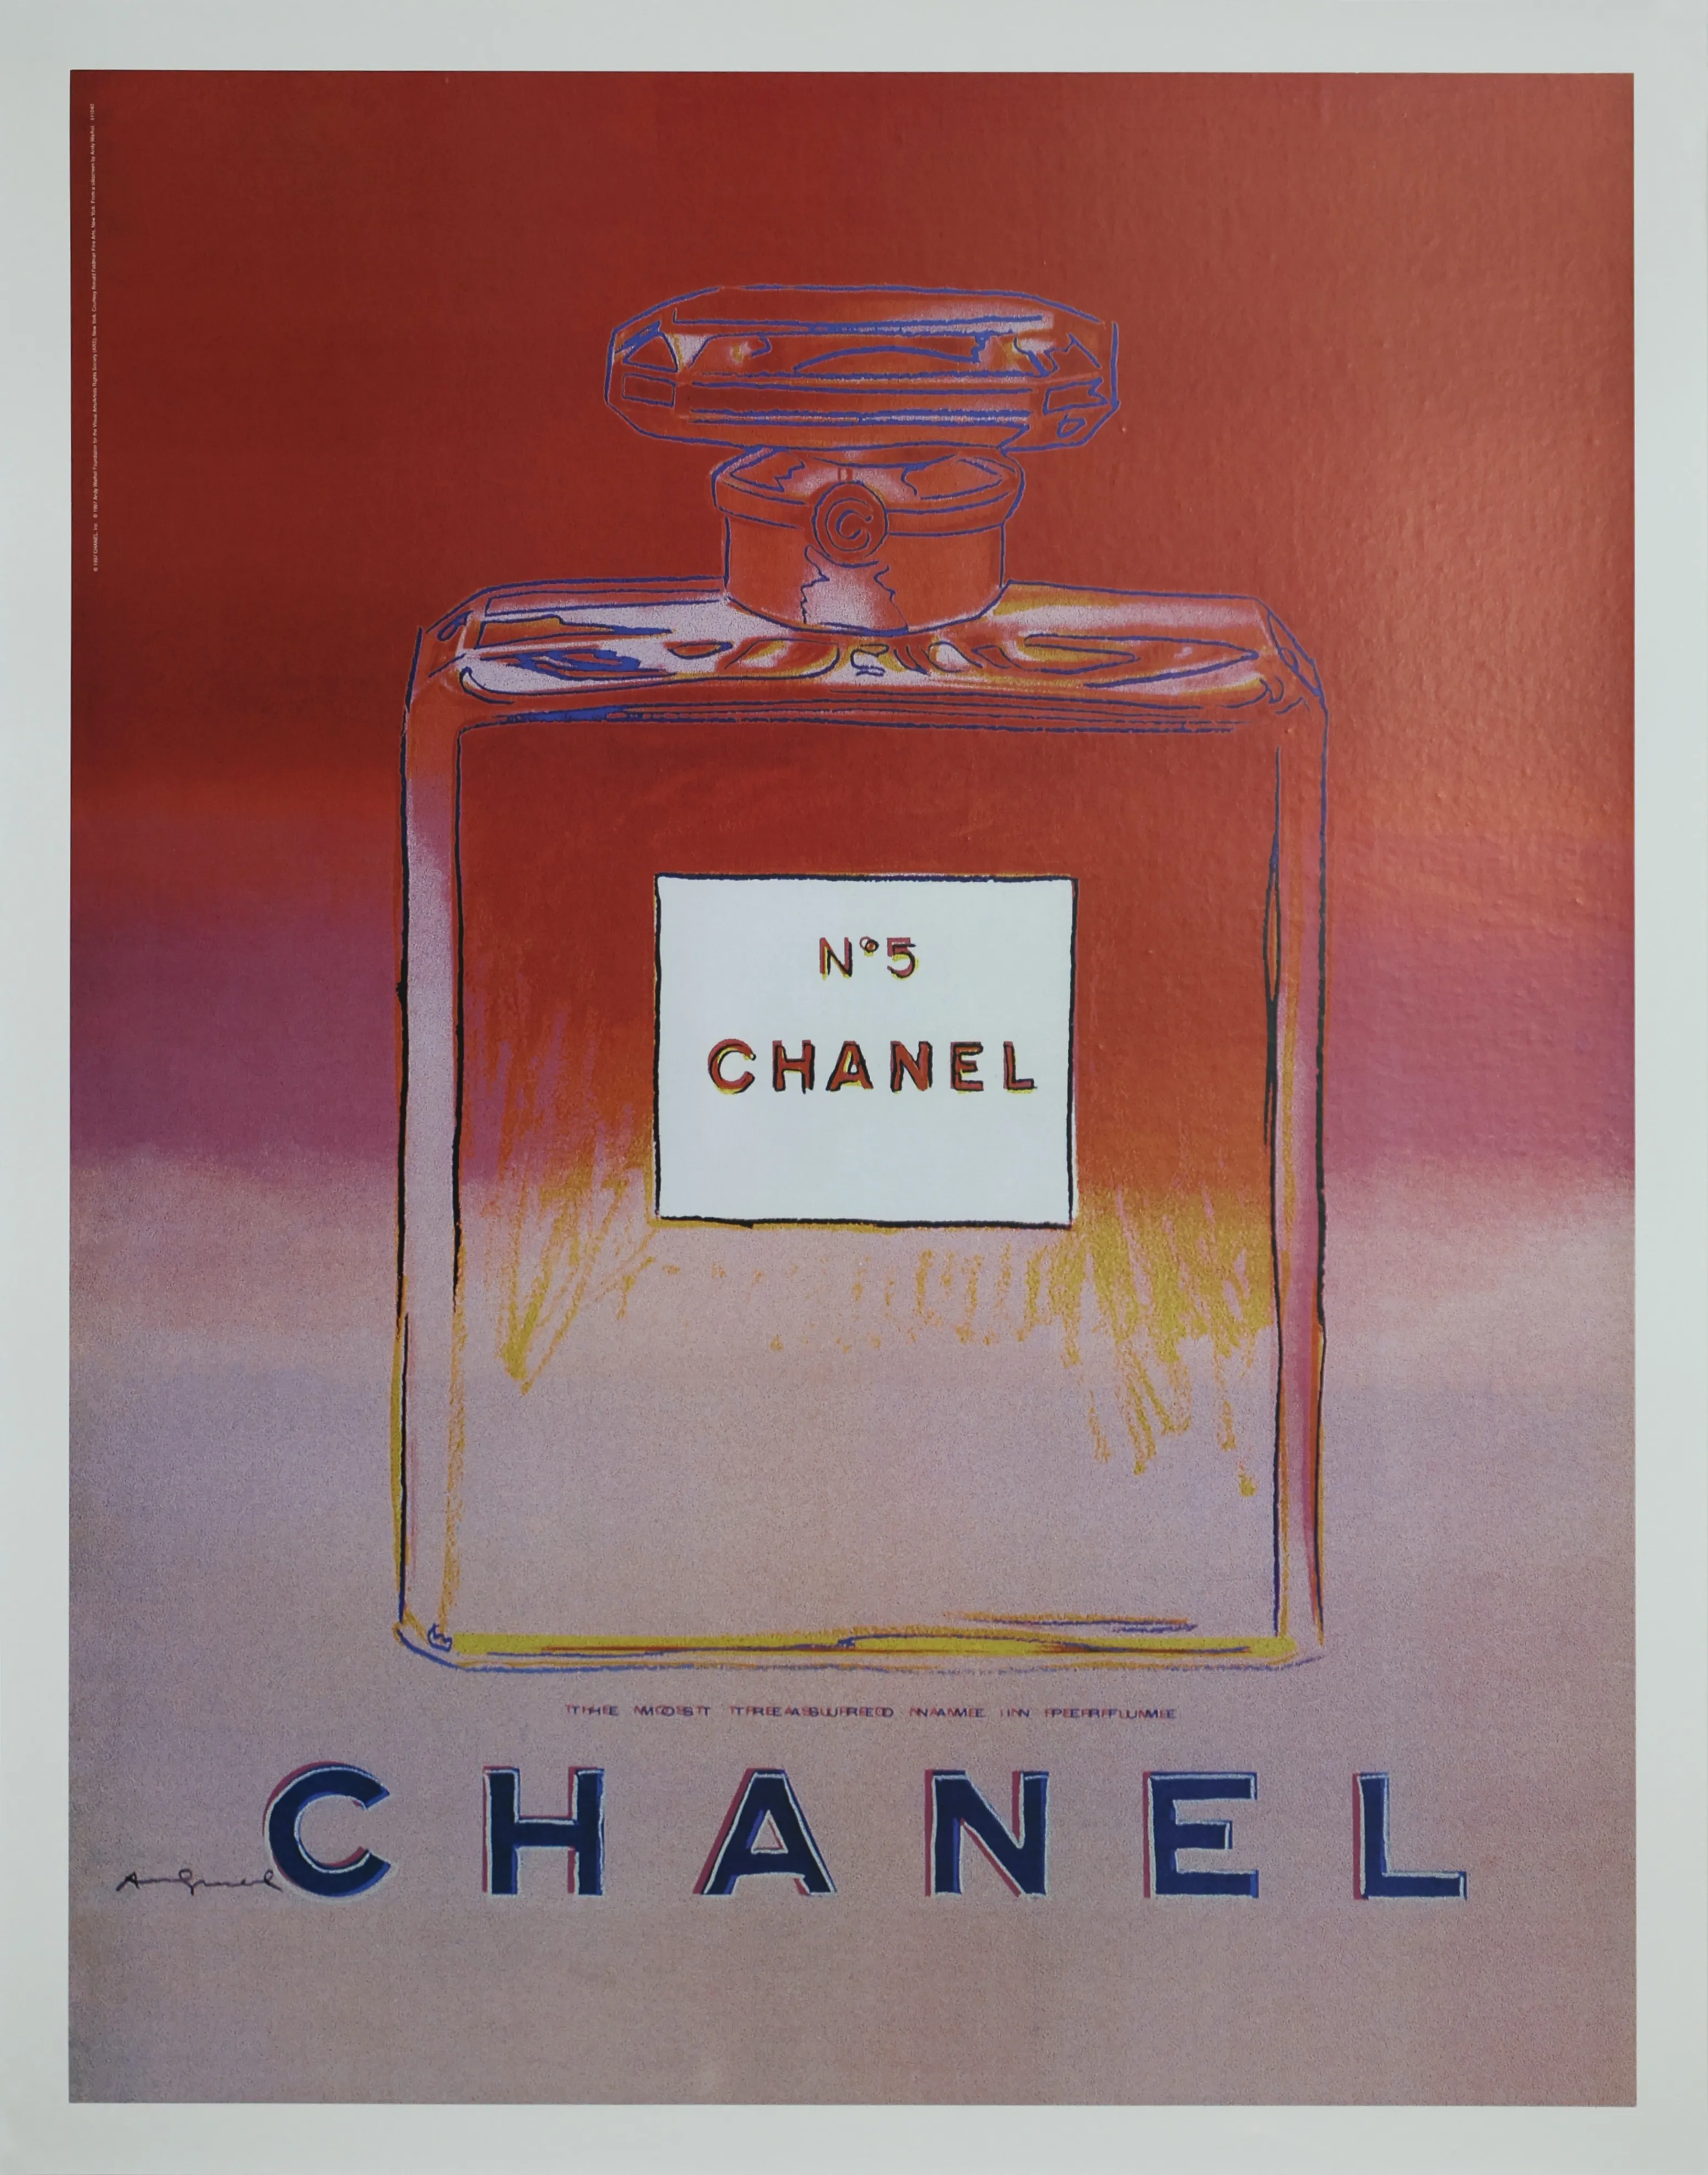 Framed Canvas Art (Champagne) - Chanel Champagne by Brenda Bush ( Fashion > Hair & Beauty > Perfume Bottles art) - 26x18 in